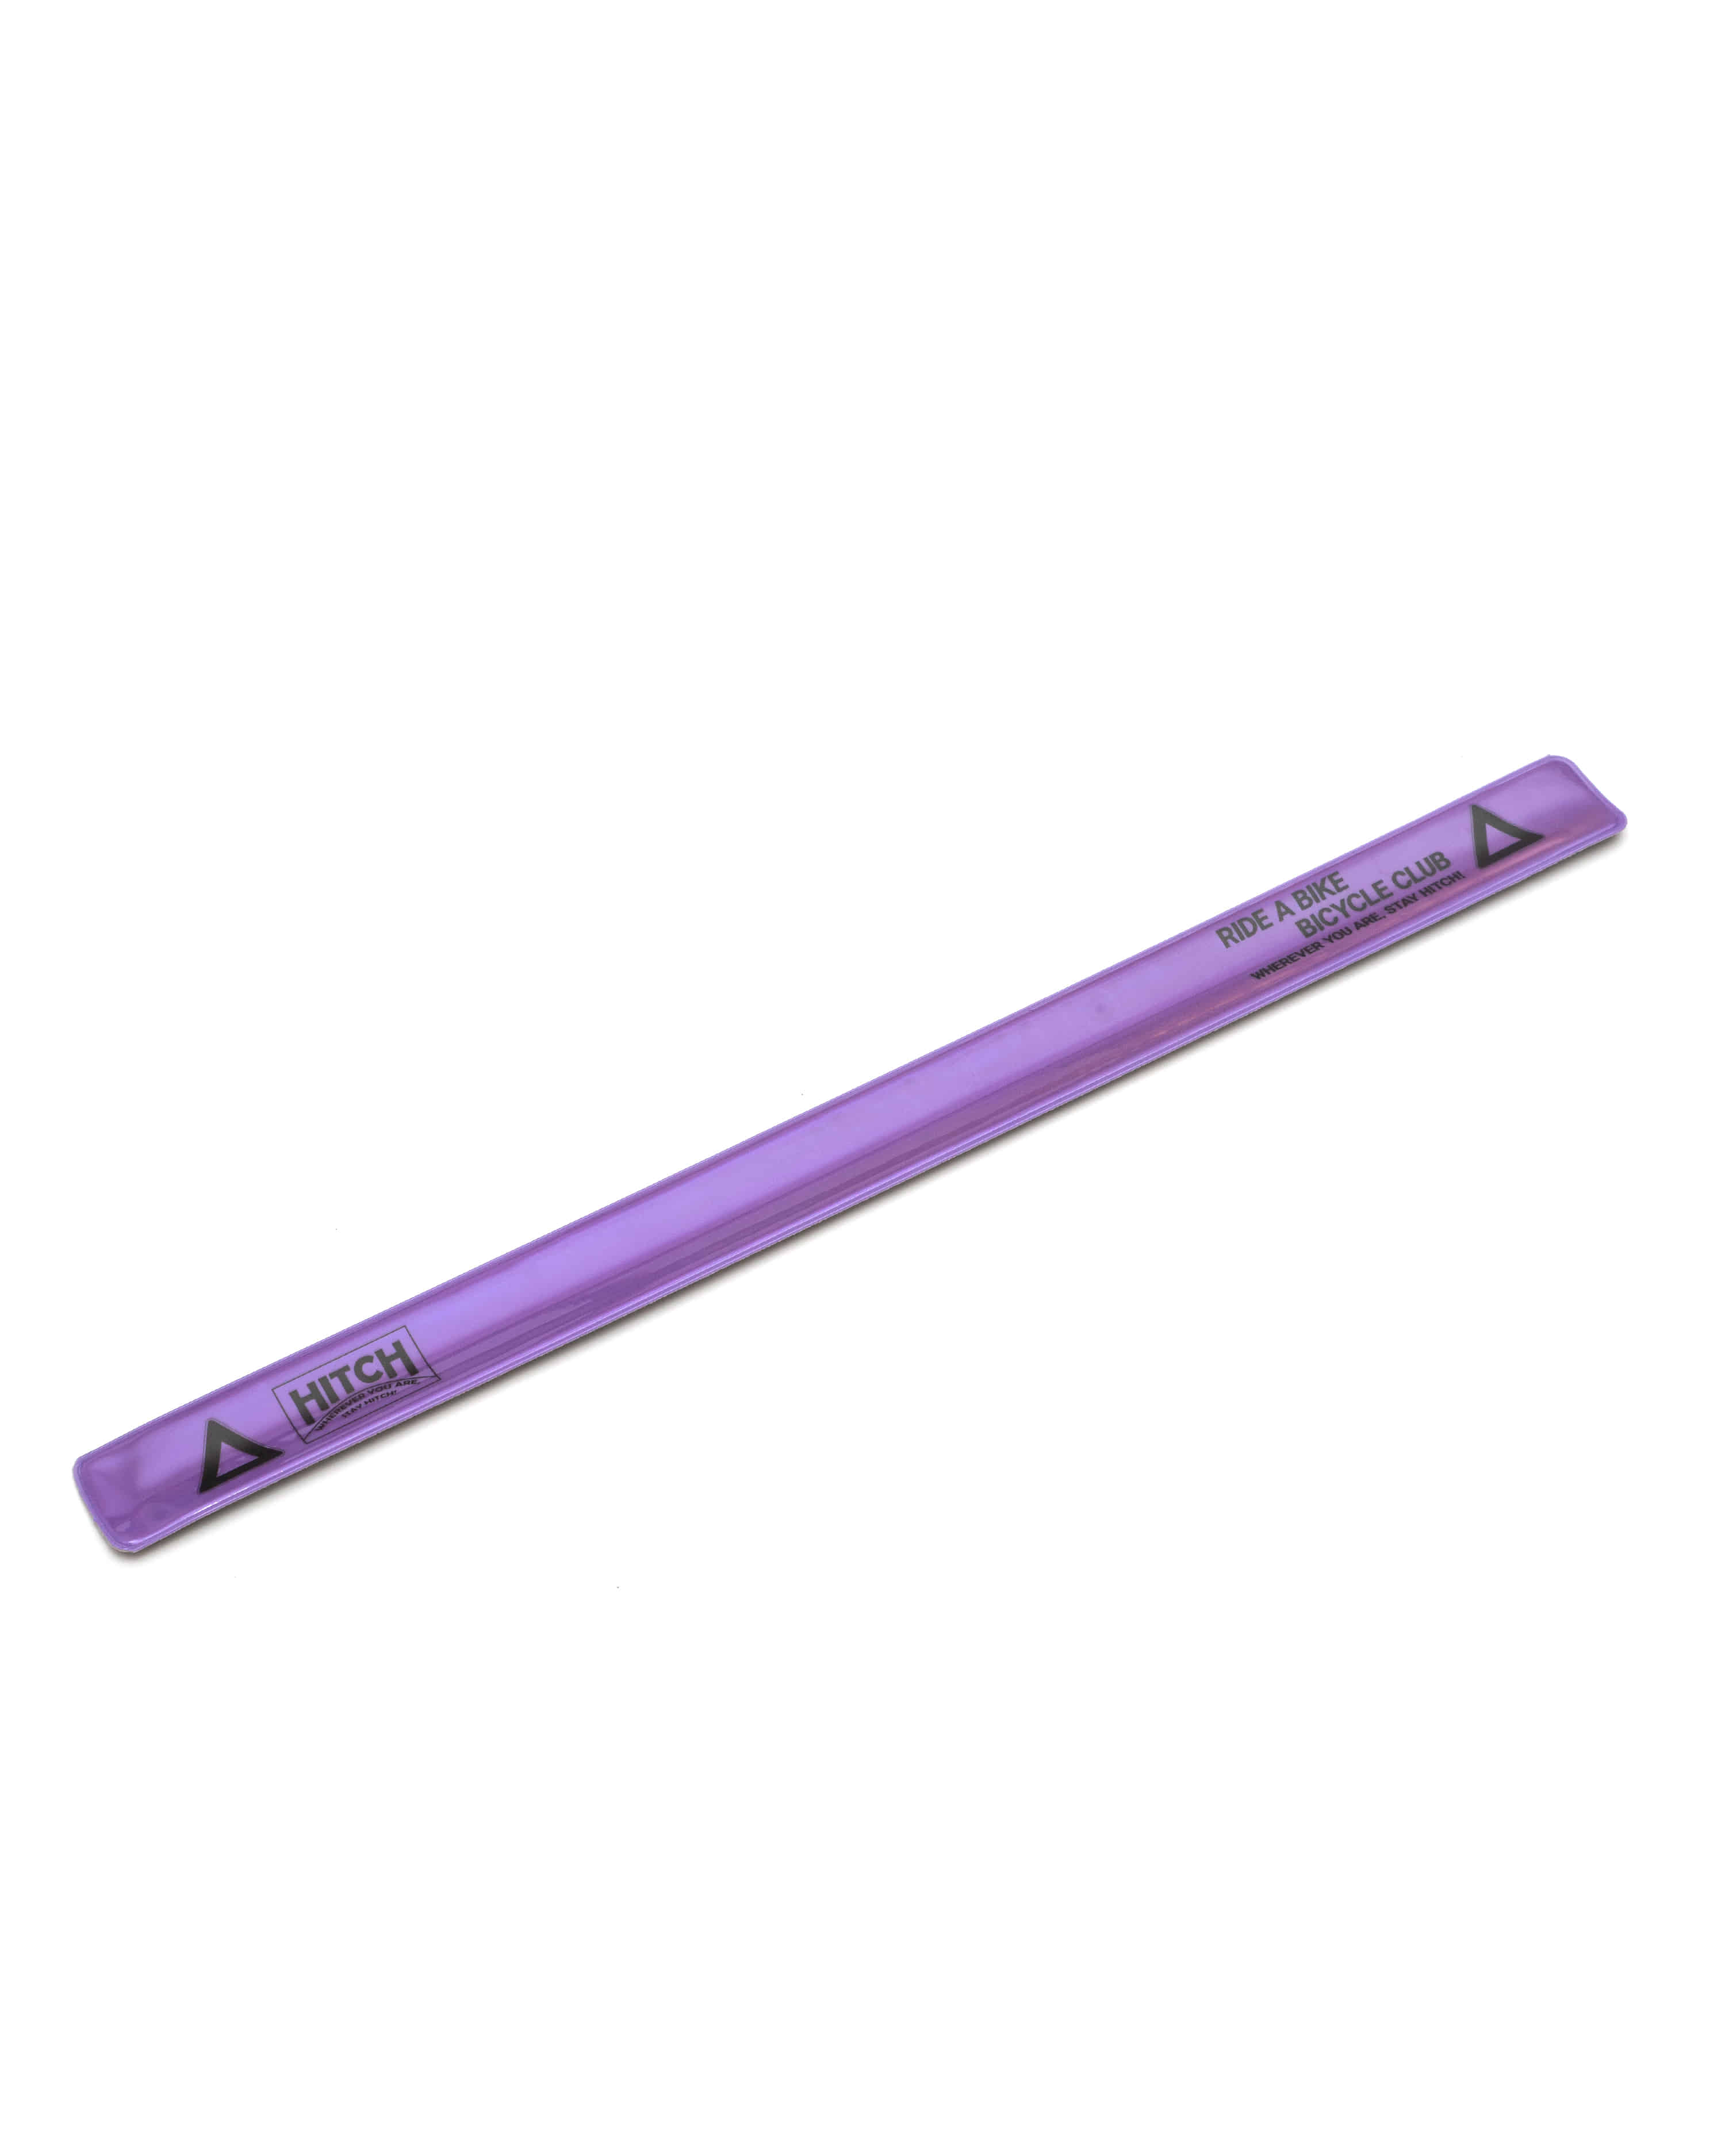 Reflector slapband (Long) - purple